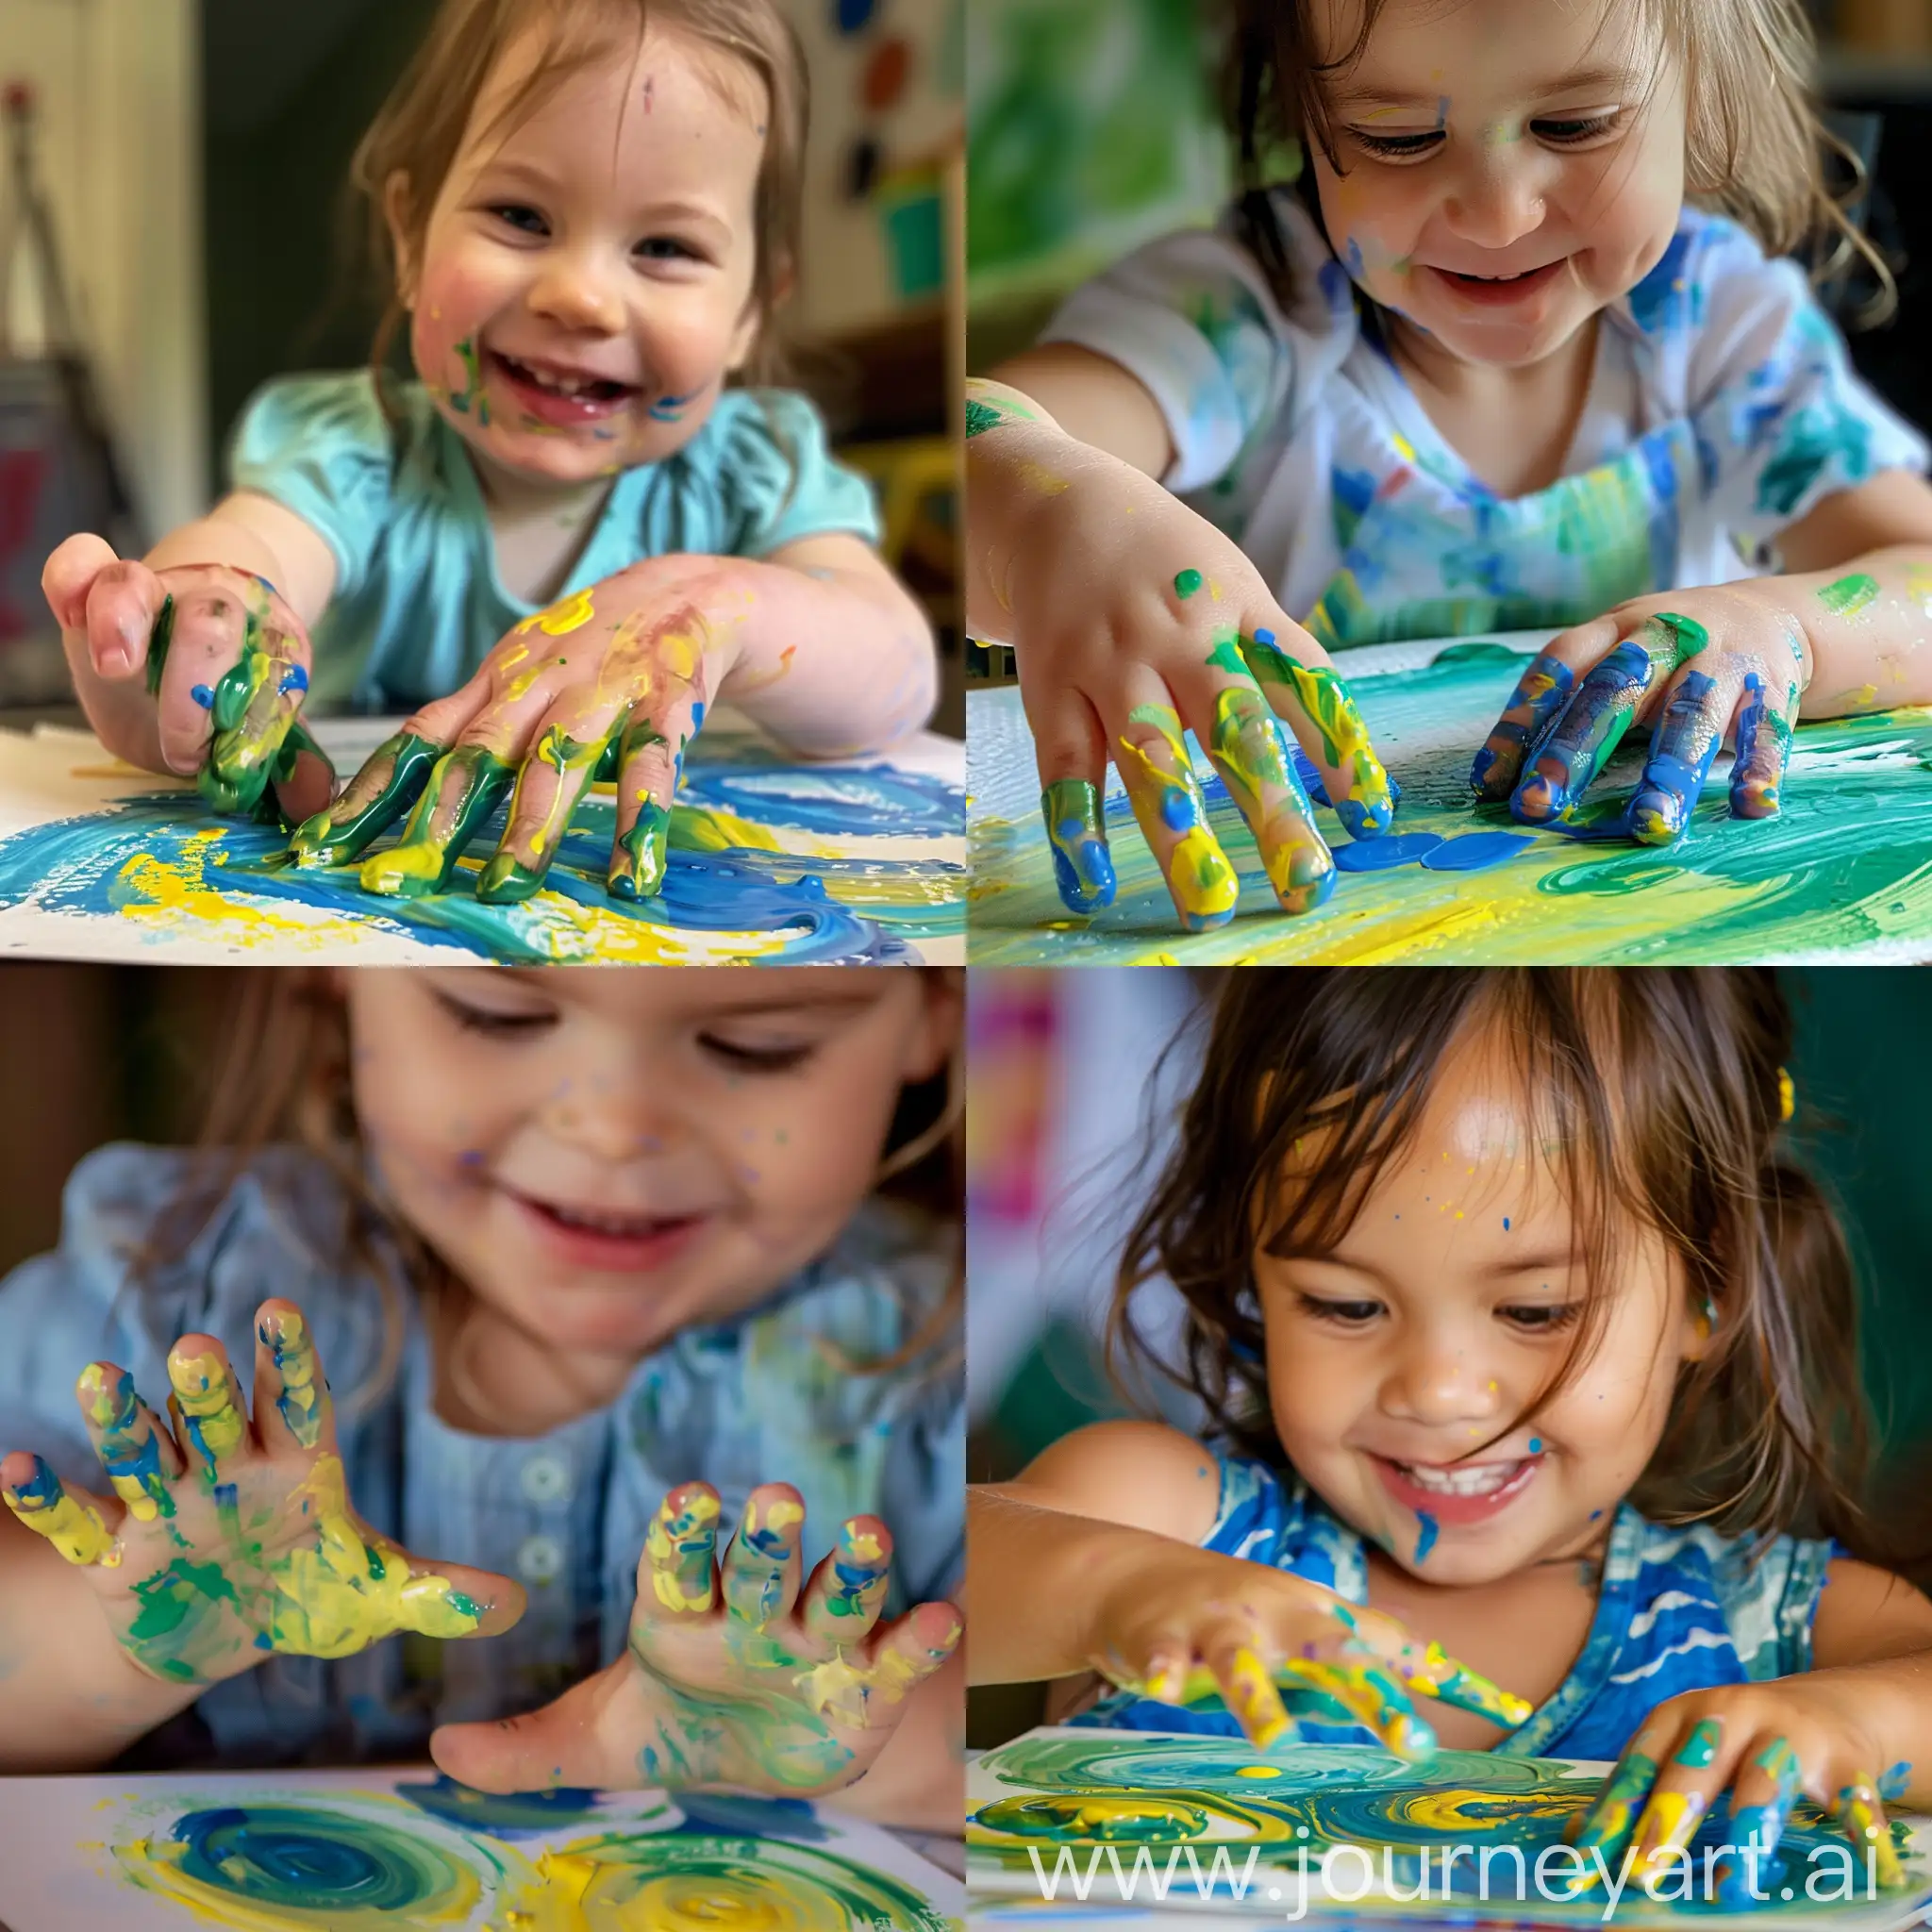 Joyful-4YearOld-Sarah-Creates-Vibrant-Green-Swirls-with-Finger-Painting